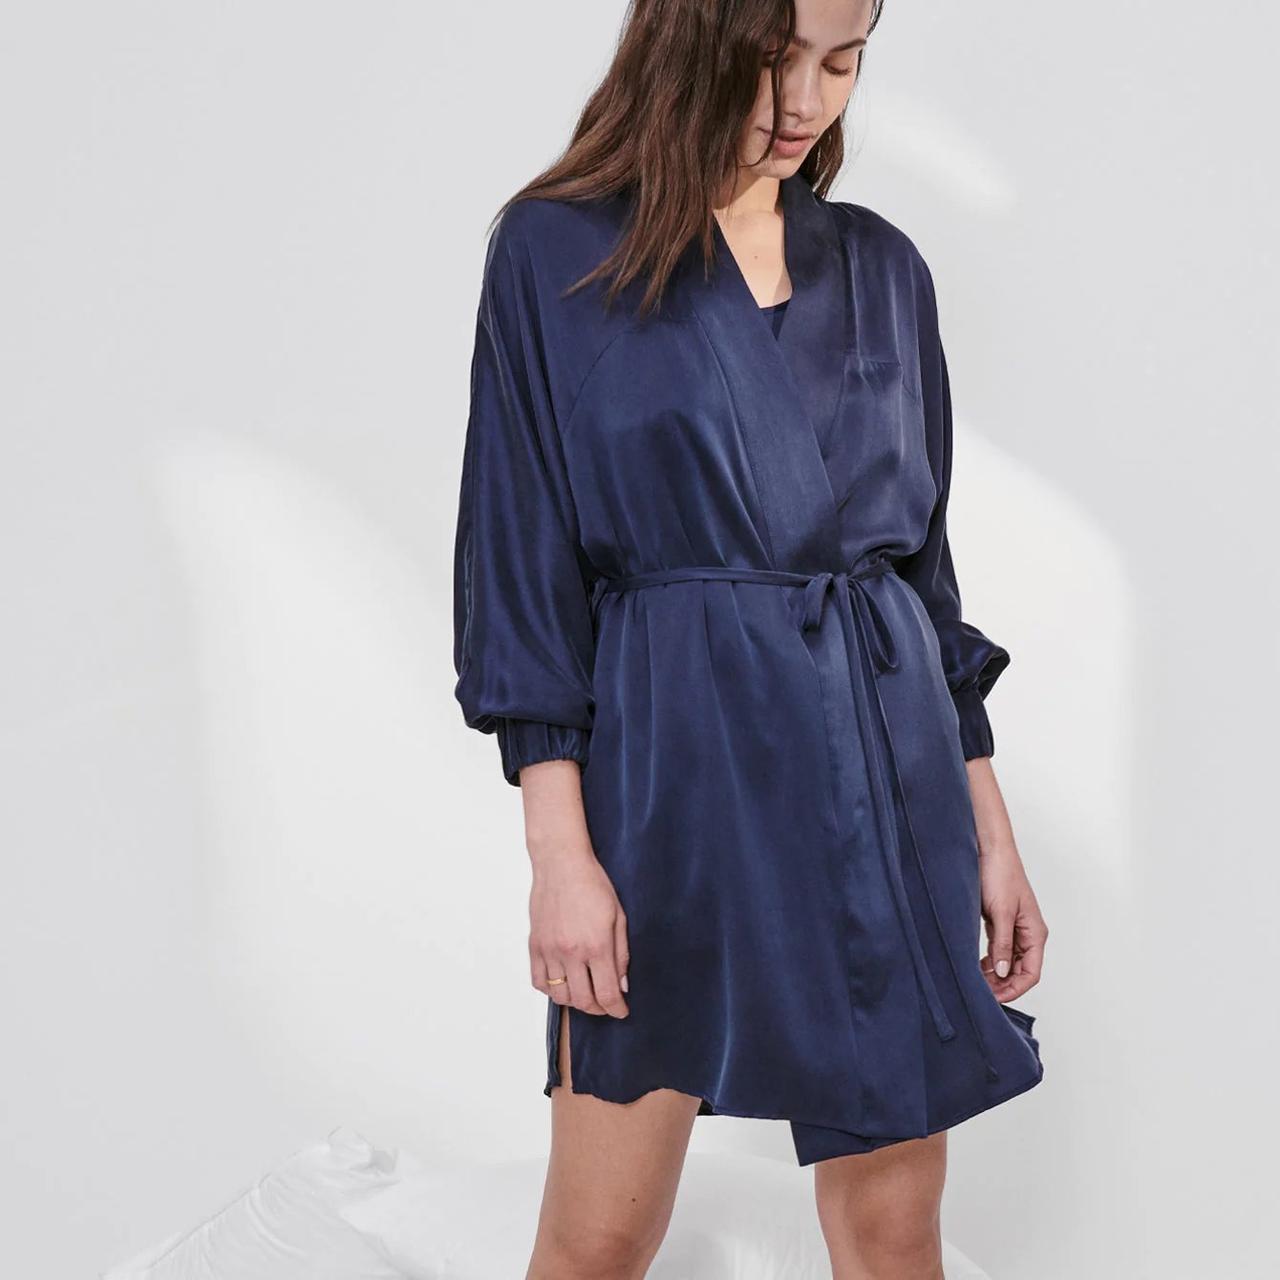 Women wearing luxe silk robe cool first anniversary gift idea